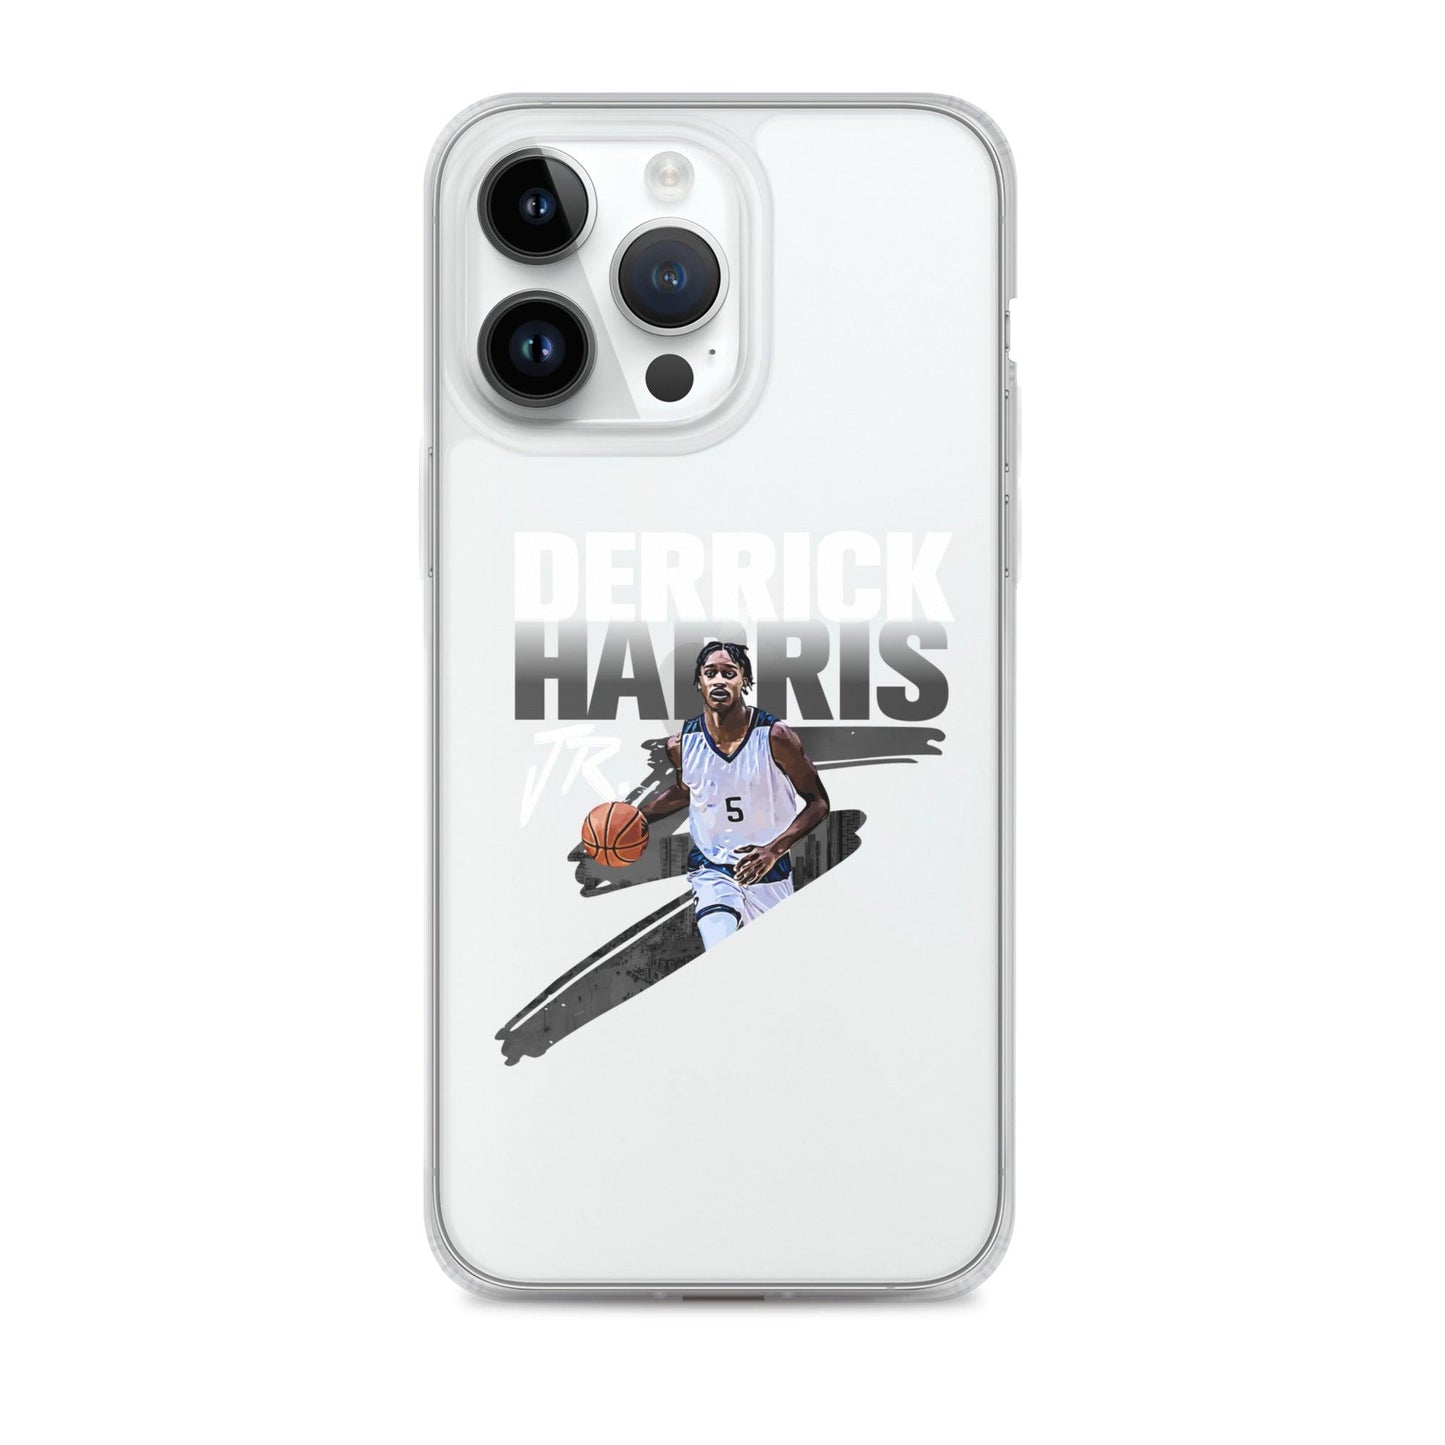 Derrick Harris Jr. "Gameday" iPhone® - Fan Arch